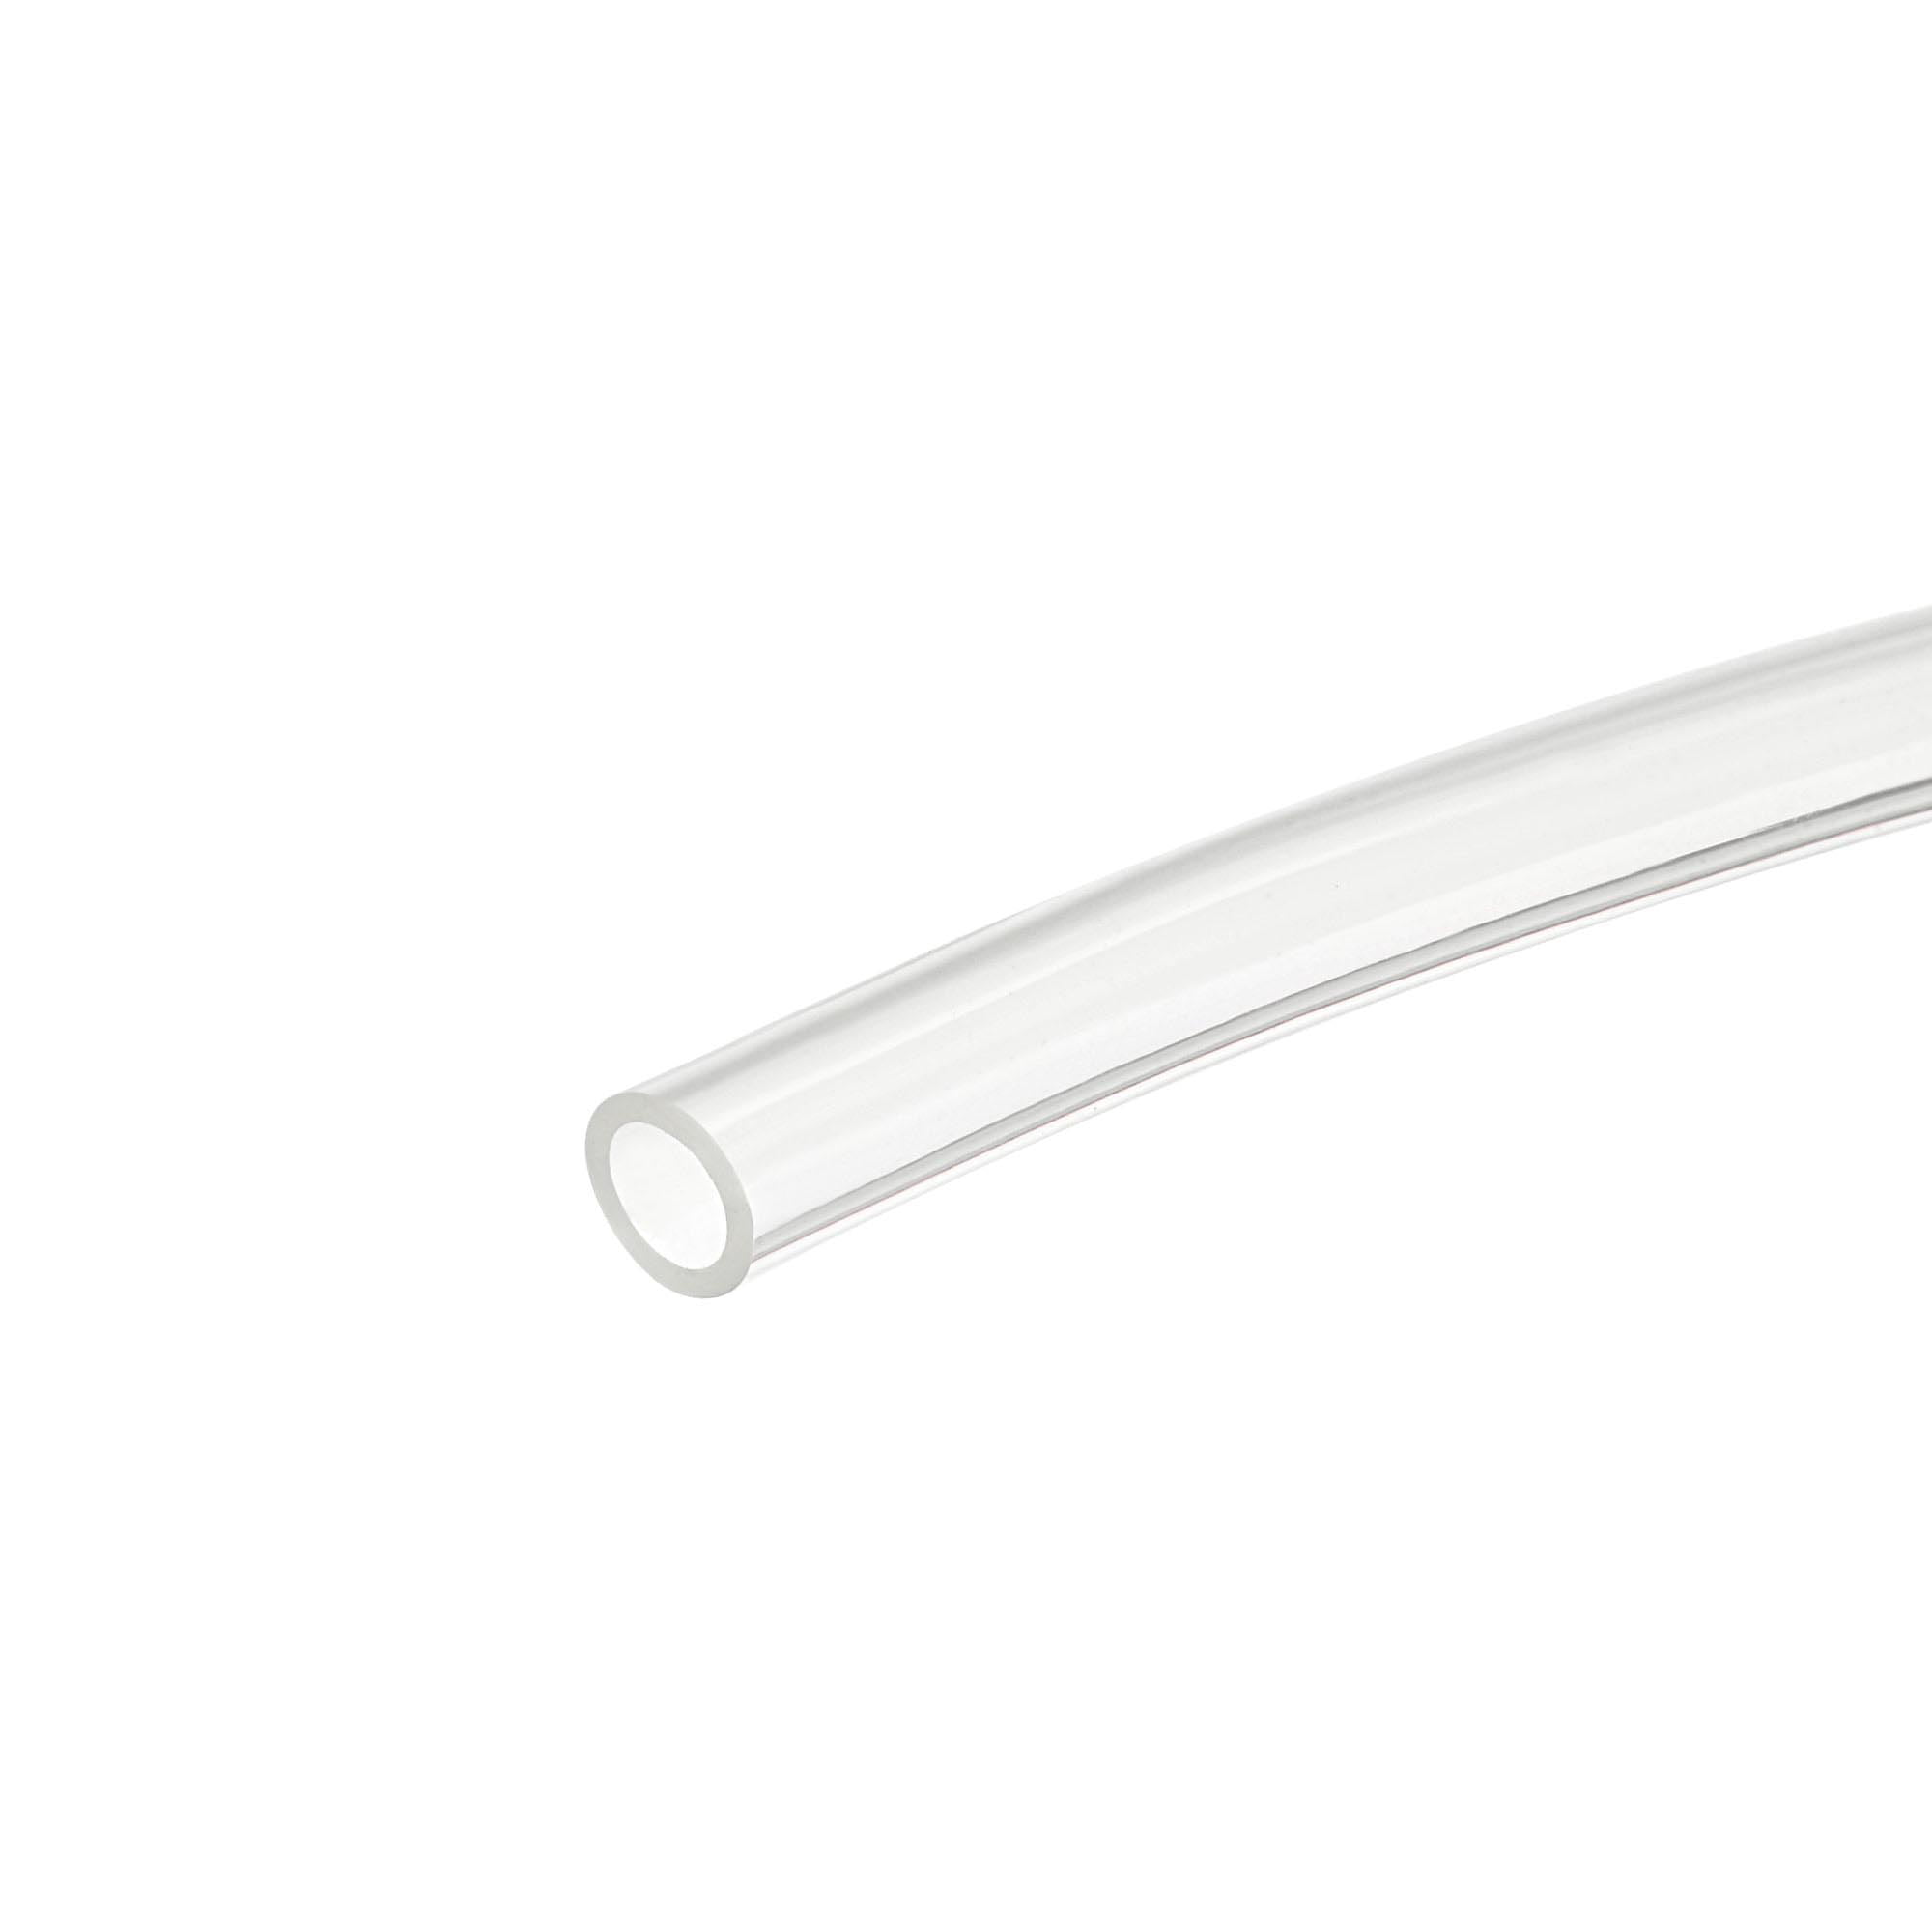 PVC Clear Plastic Tube Pipe 5mm Internal Diameter 7mm External Diameter Hose 